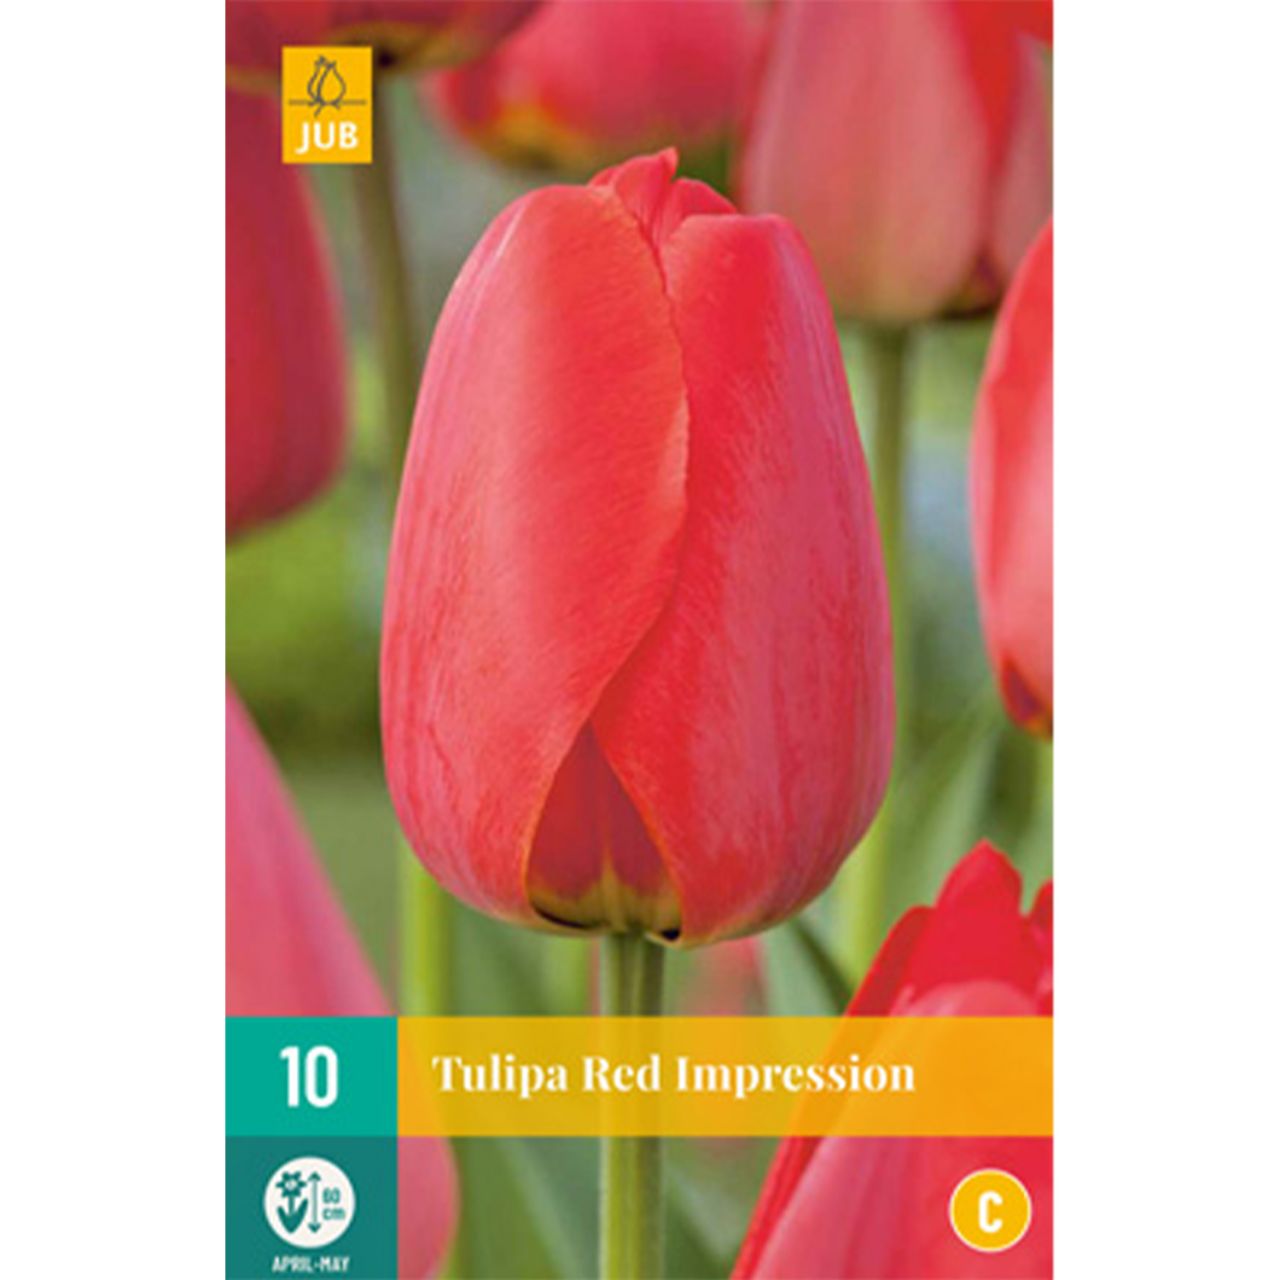 Kategorie <b>Herbst-Blumenzwiebeln </b> - Darwin-Hybrid Tulpe 'Red Impression' - 10 Stück - Tulipa 'Red Impression'